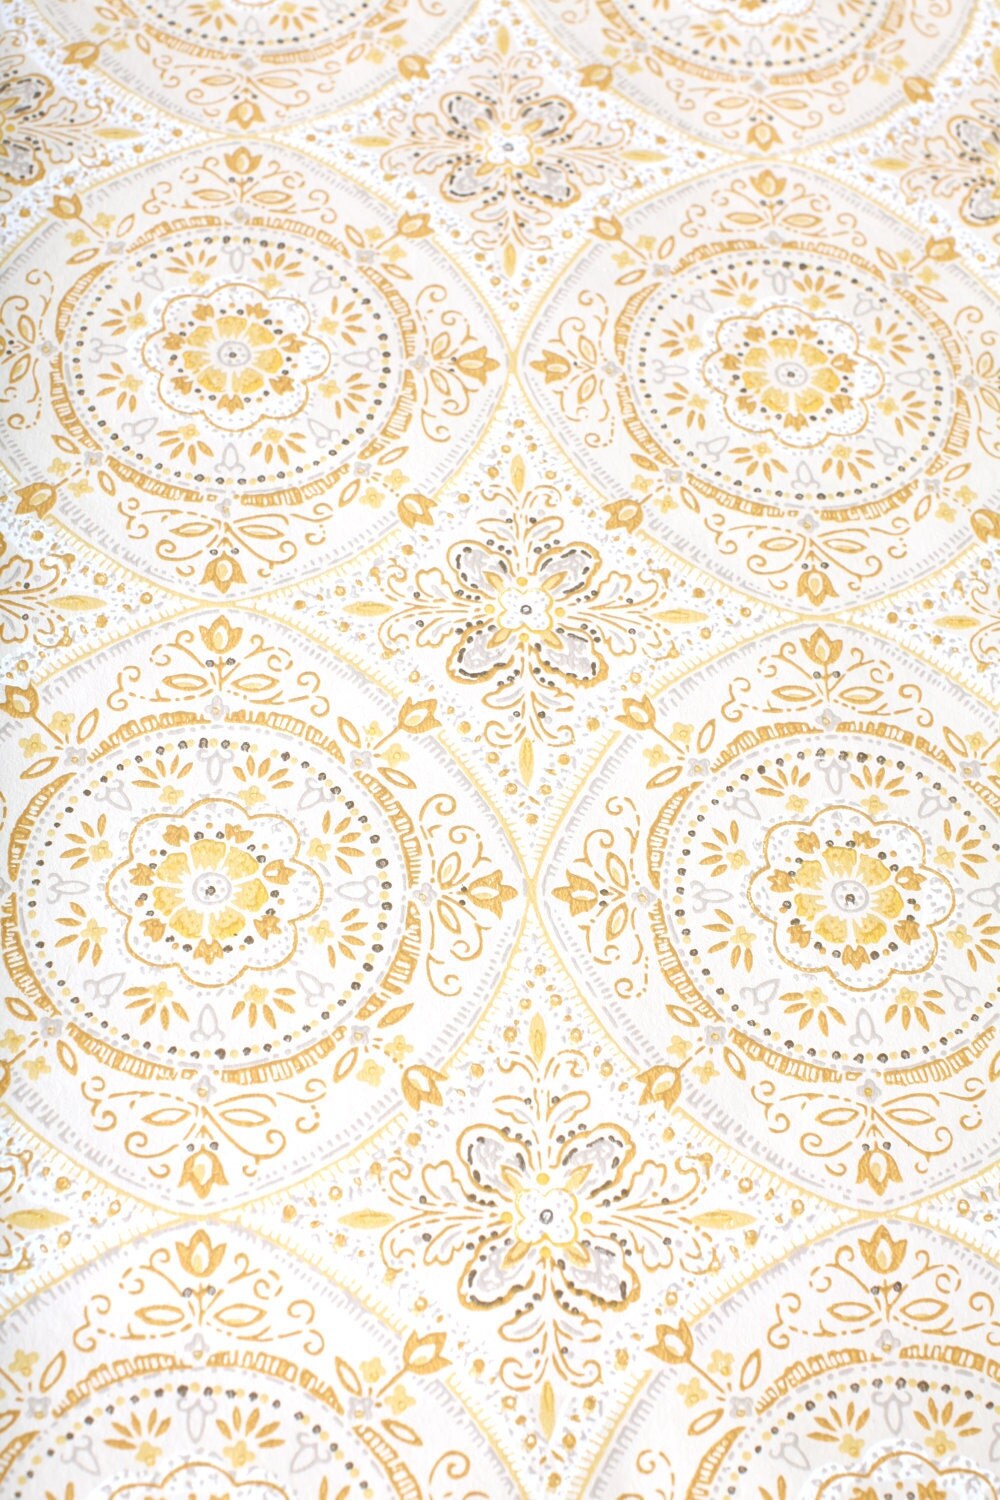 yellow geometric wallpaper